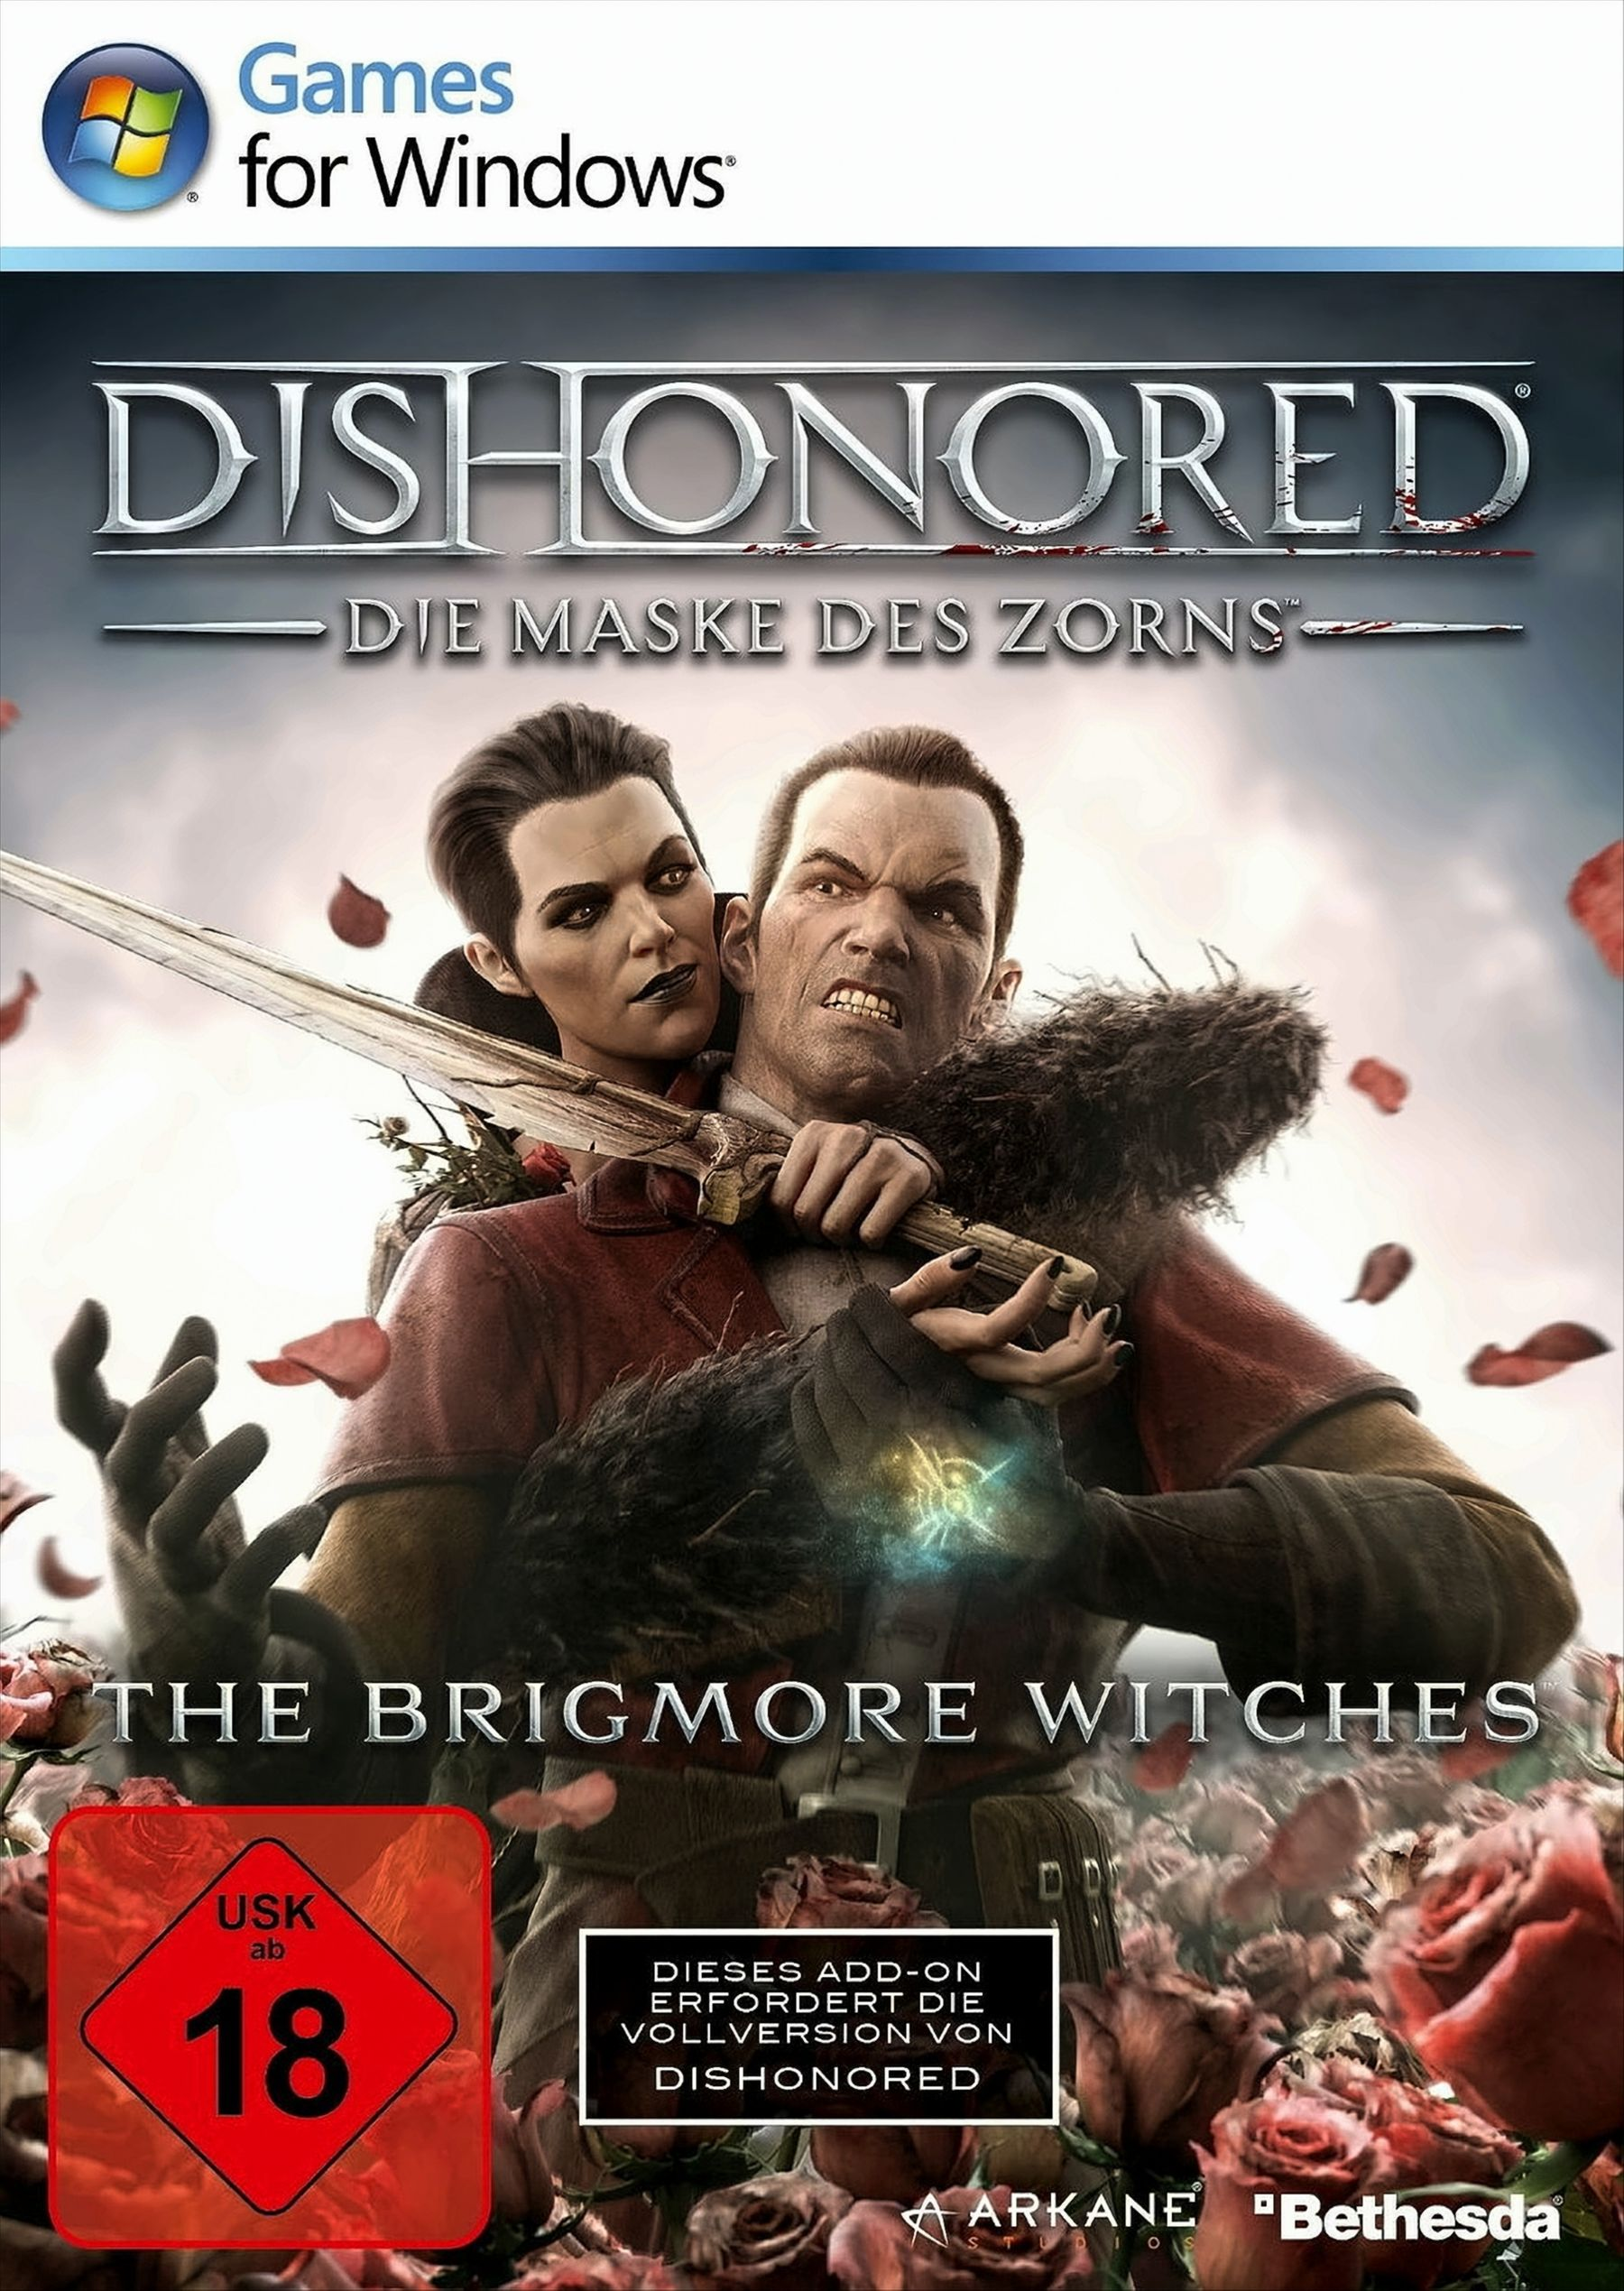 Witches [PC] Die Zorns: The Brigmore - Dishonored - Maske des